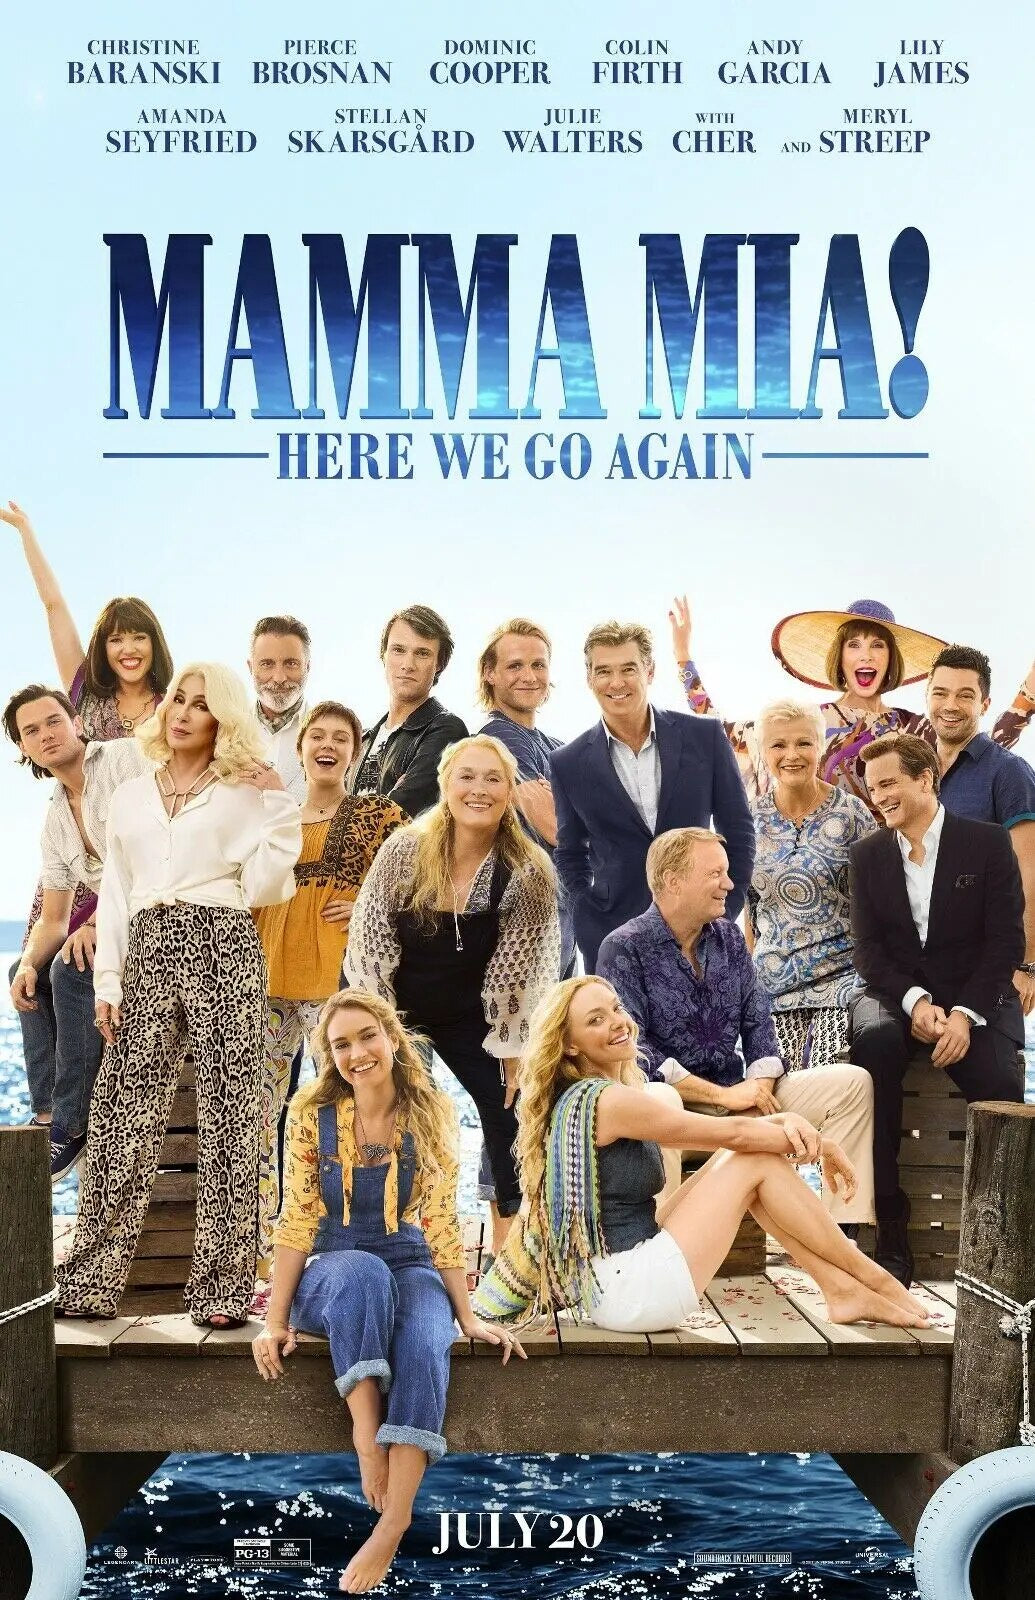 Mamma Mia Here We Go Again - Abba Musical Movie Poster-30x45cm-